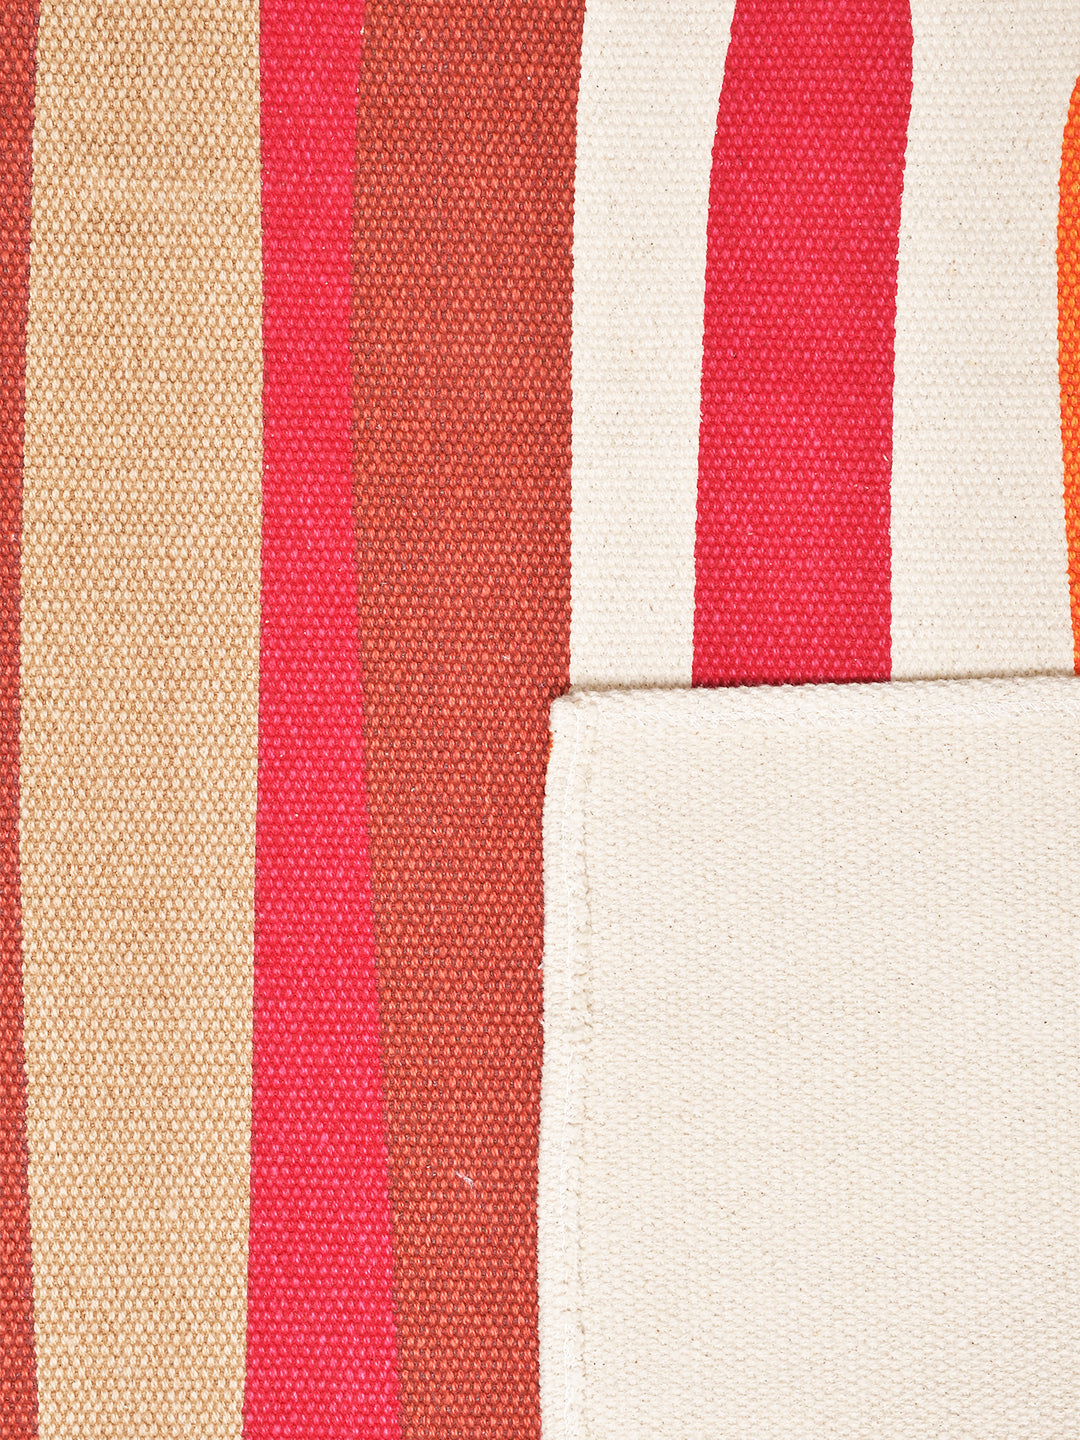 Blanc9 Hurly-Burly Rusty Red 4'x5.5' Printed Cotton Carpet